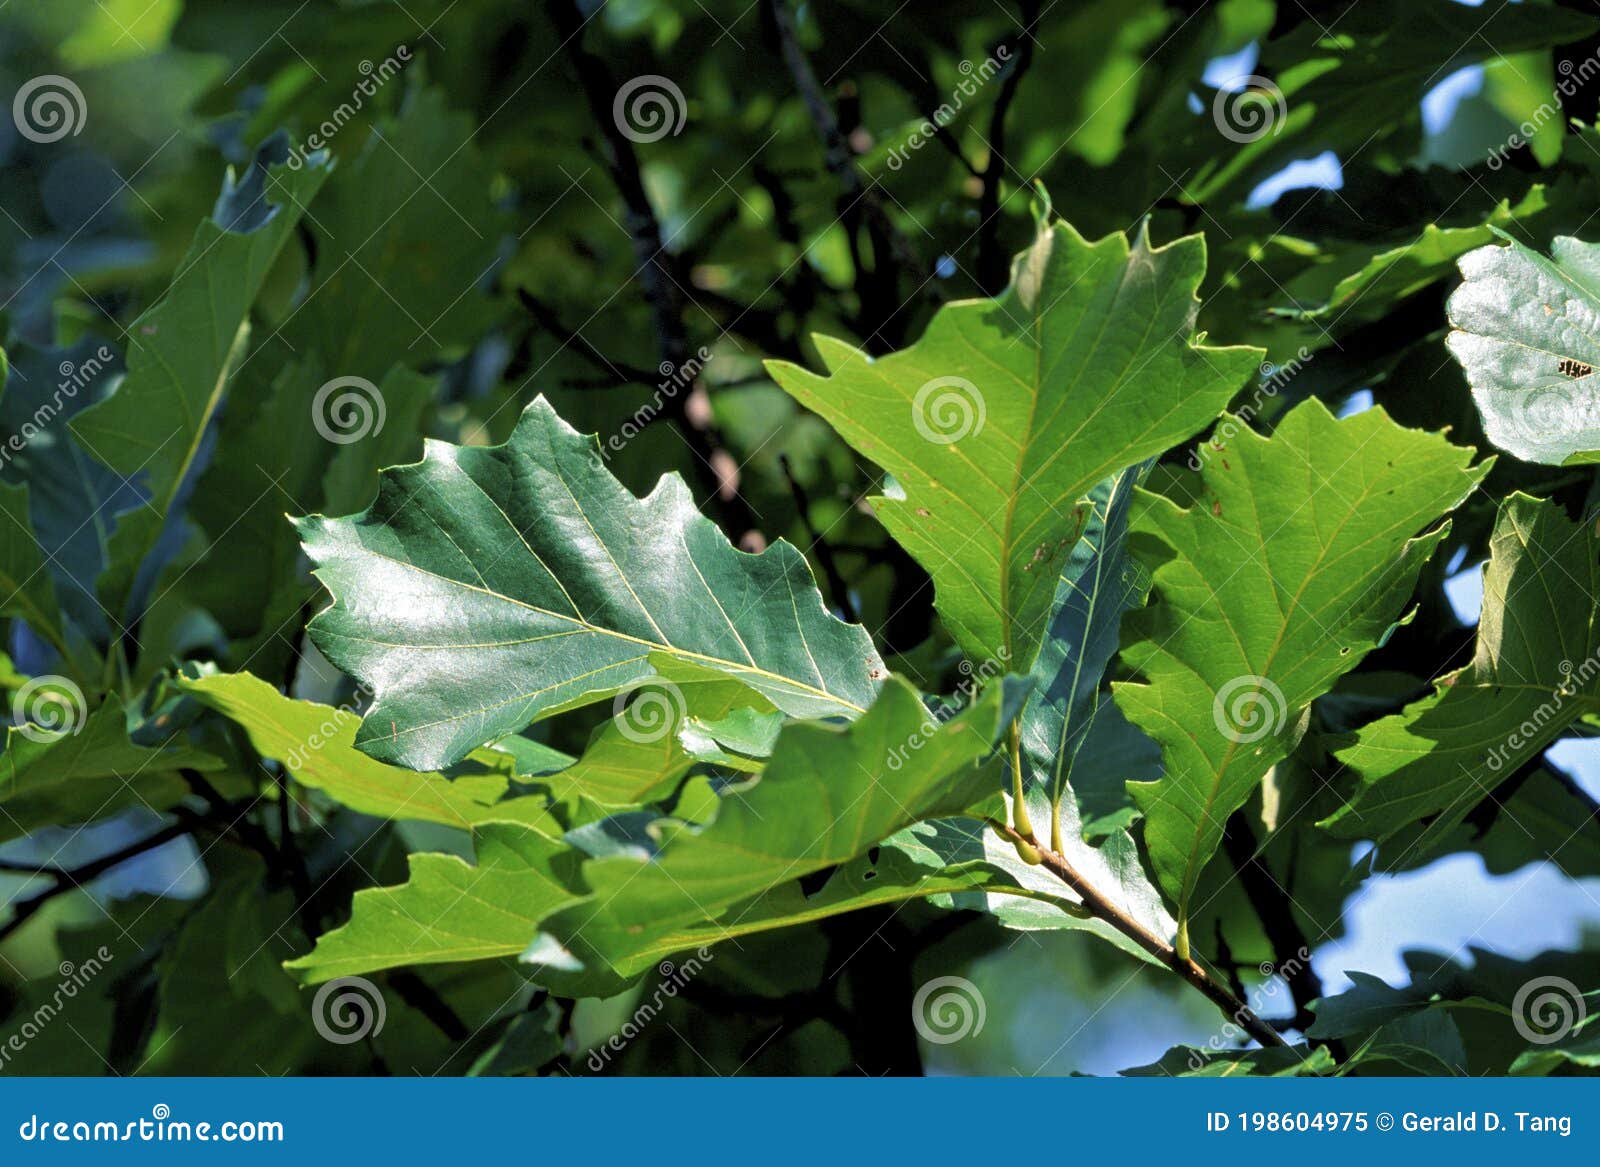 swamp white oak   51248